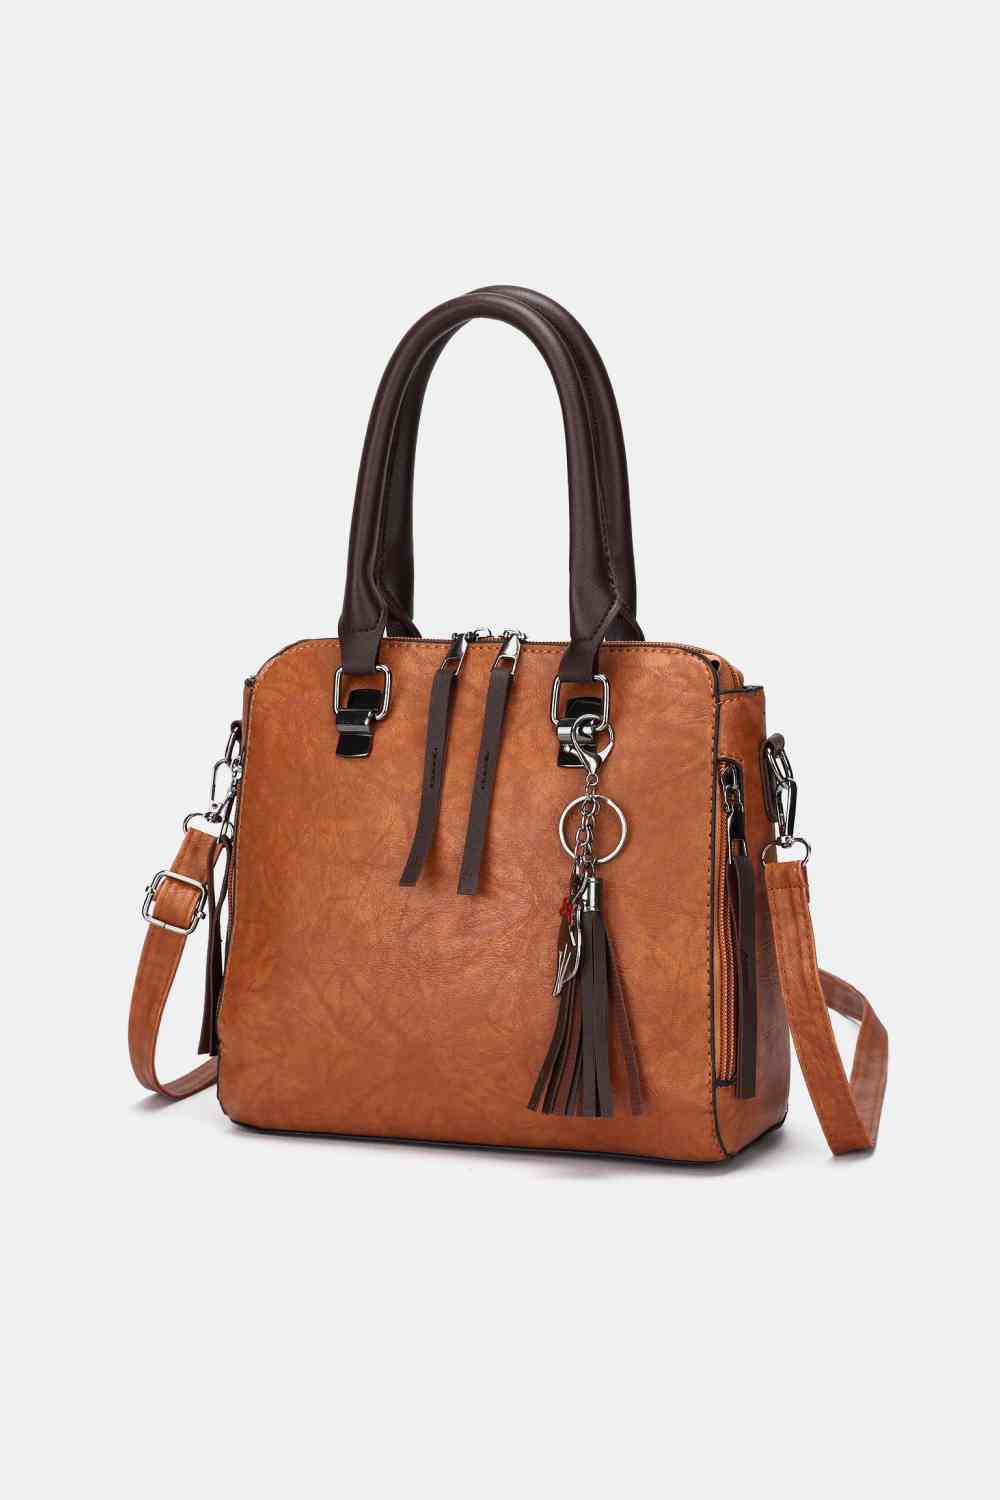 4-Piece PU Leather Bag Set - Handbag - FITGGINS